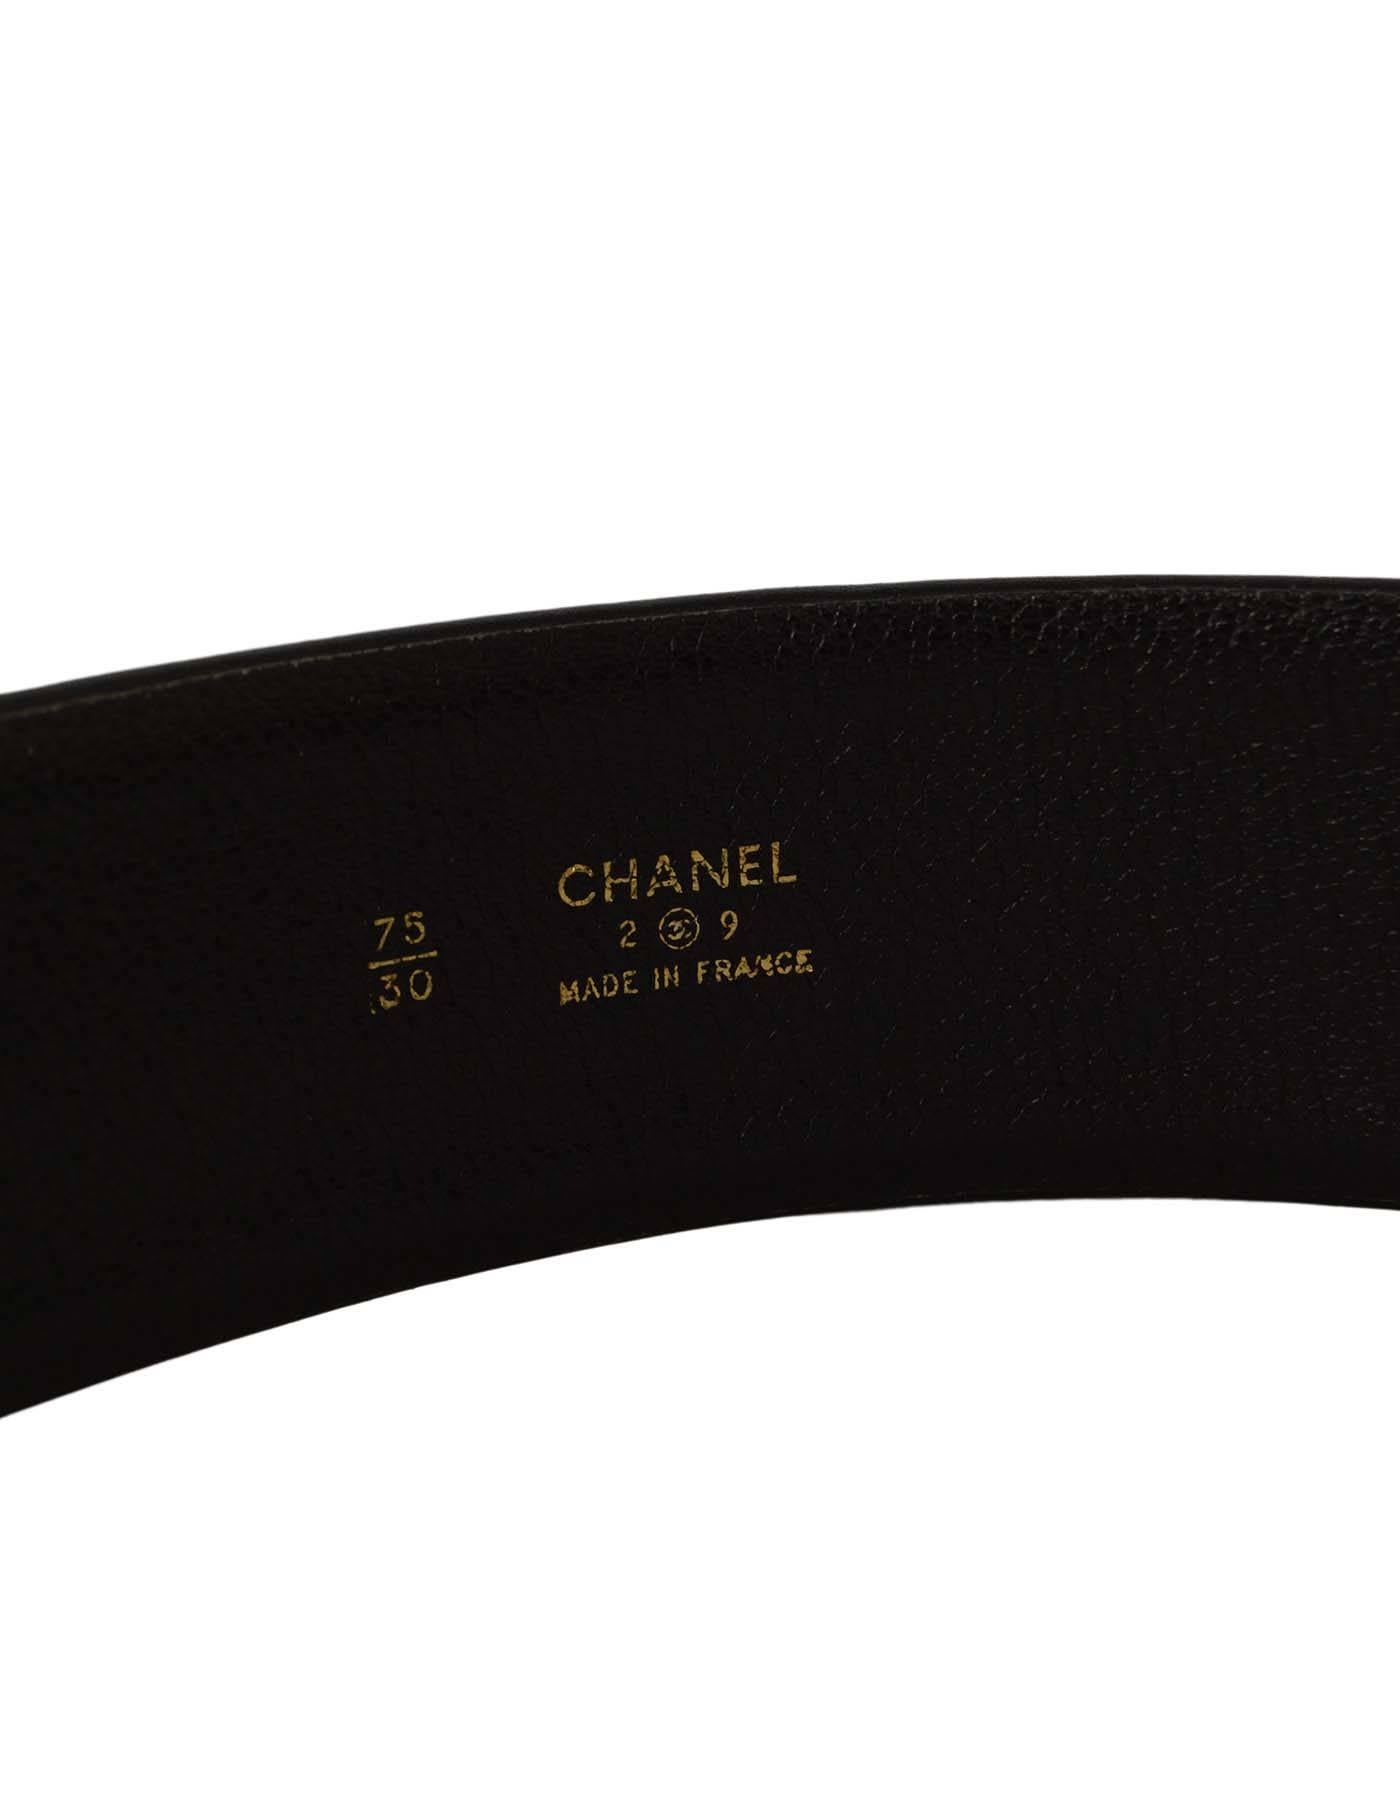 Chanel Vintage '89 Black Leather Wide Belt 
Buckle features 